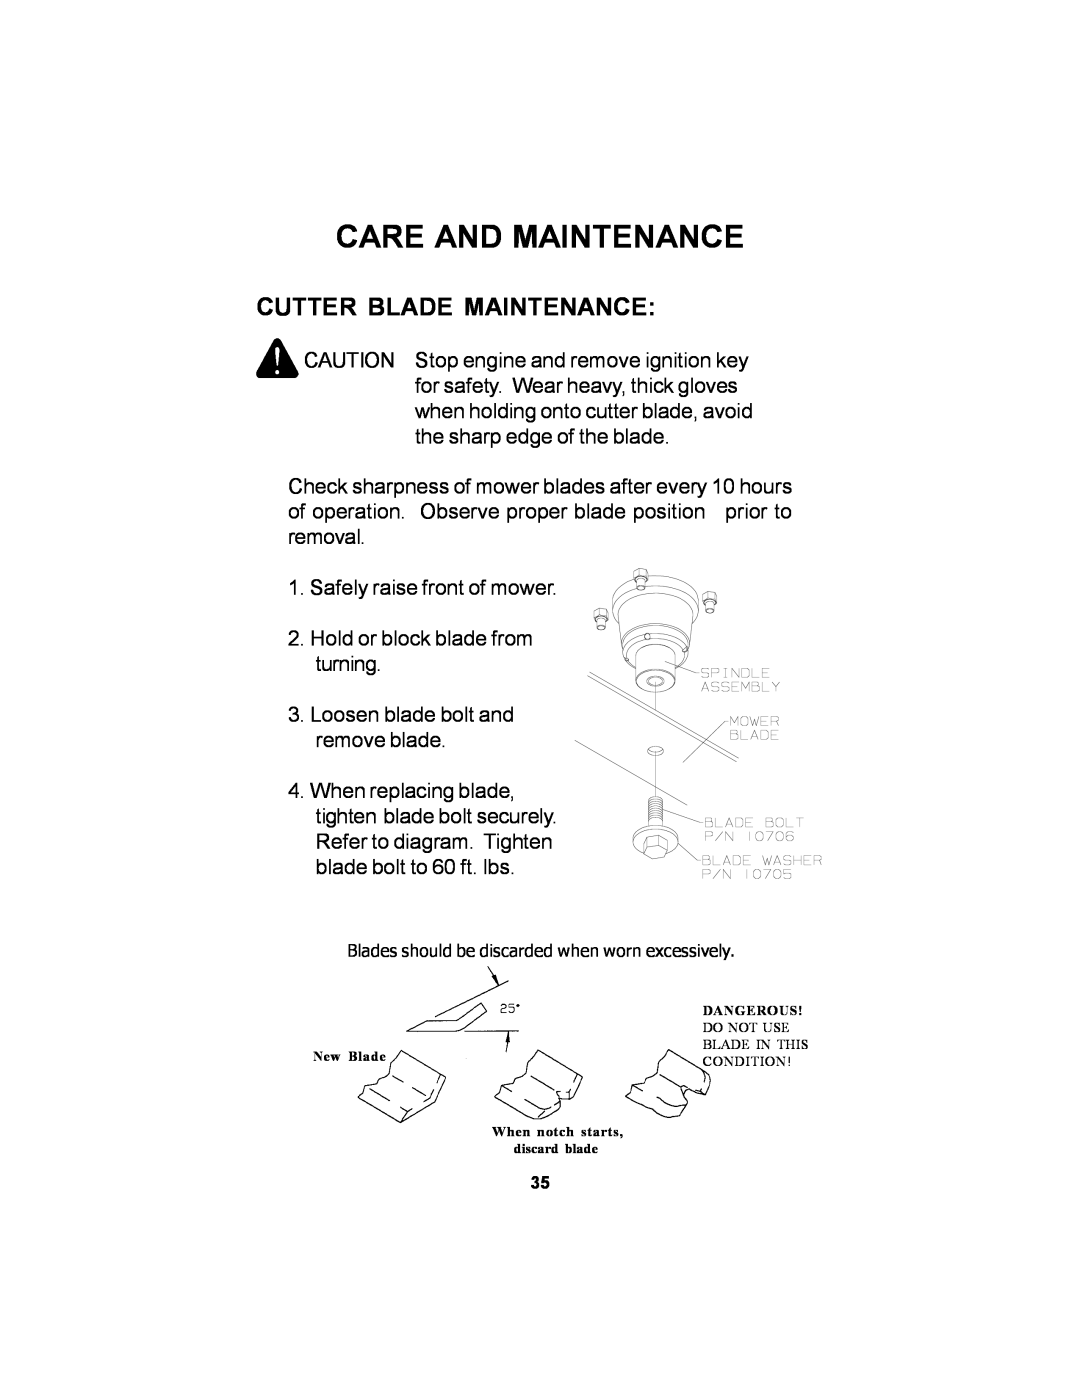 Dixon Black Bear manual Cutter Blade Maintenance, Care And Maintenance 